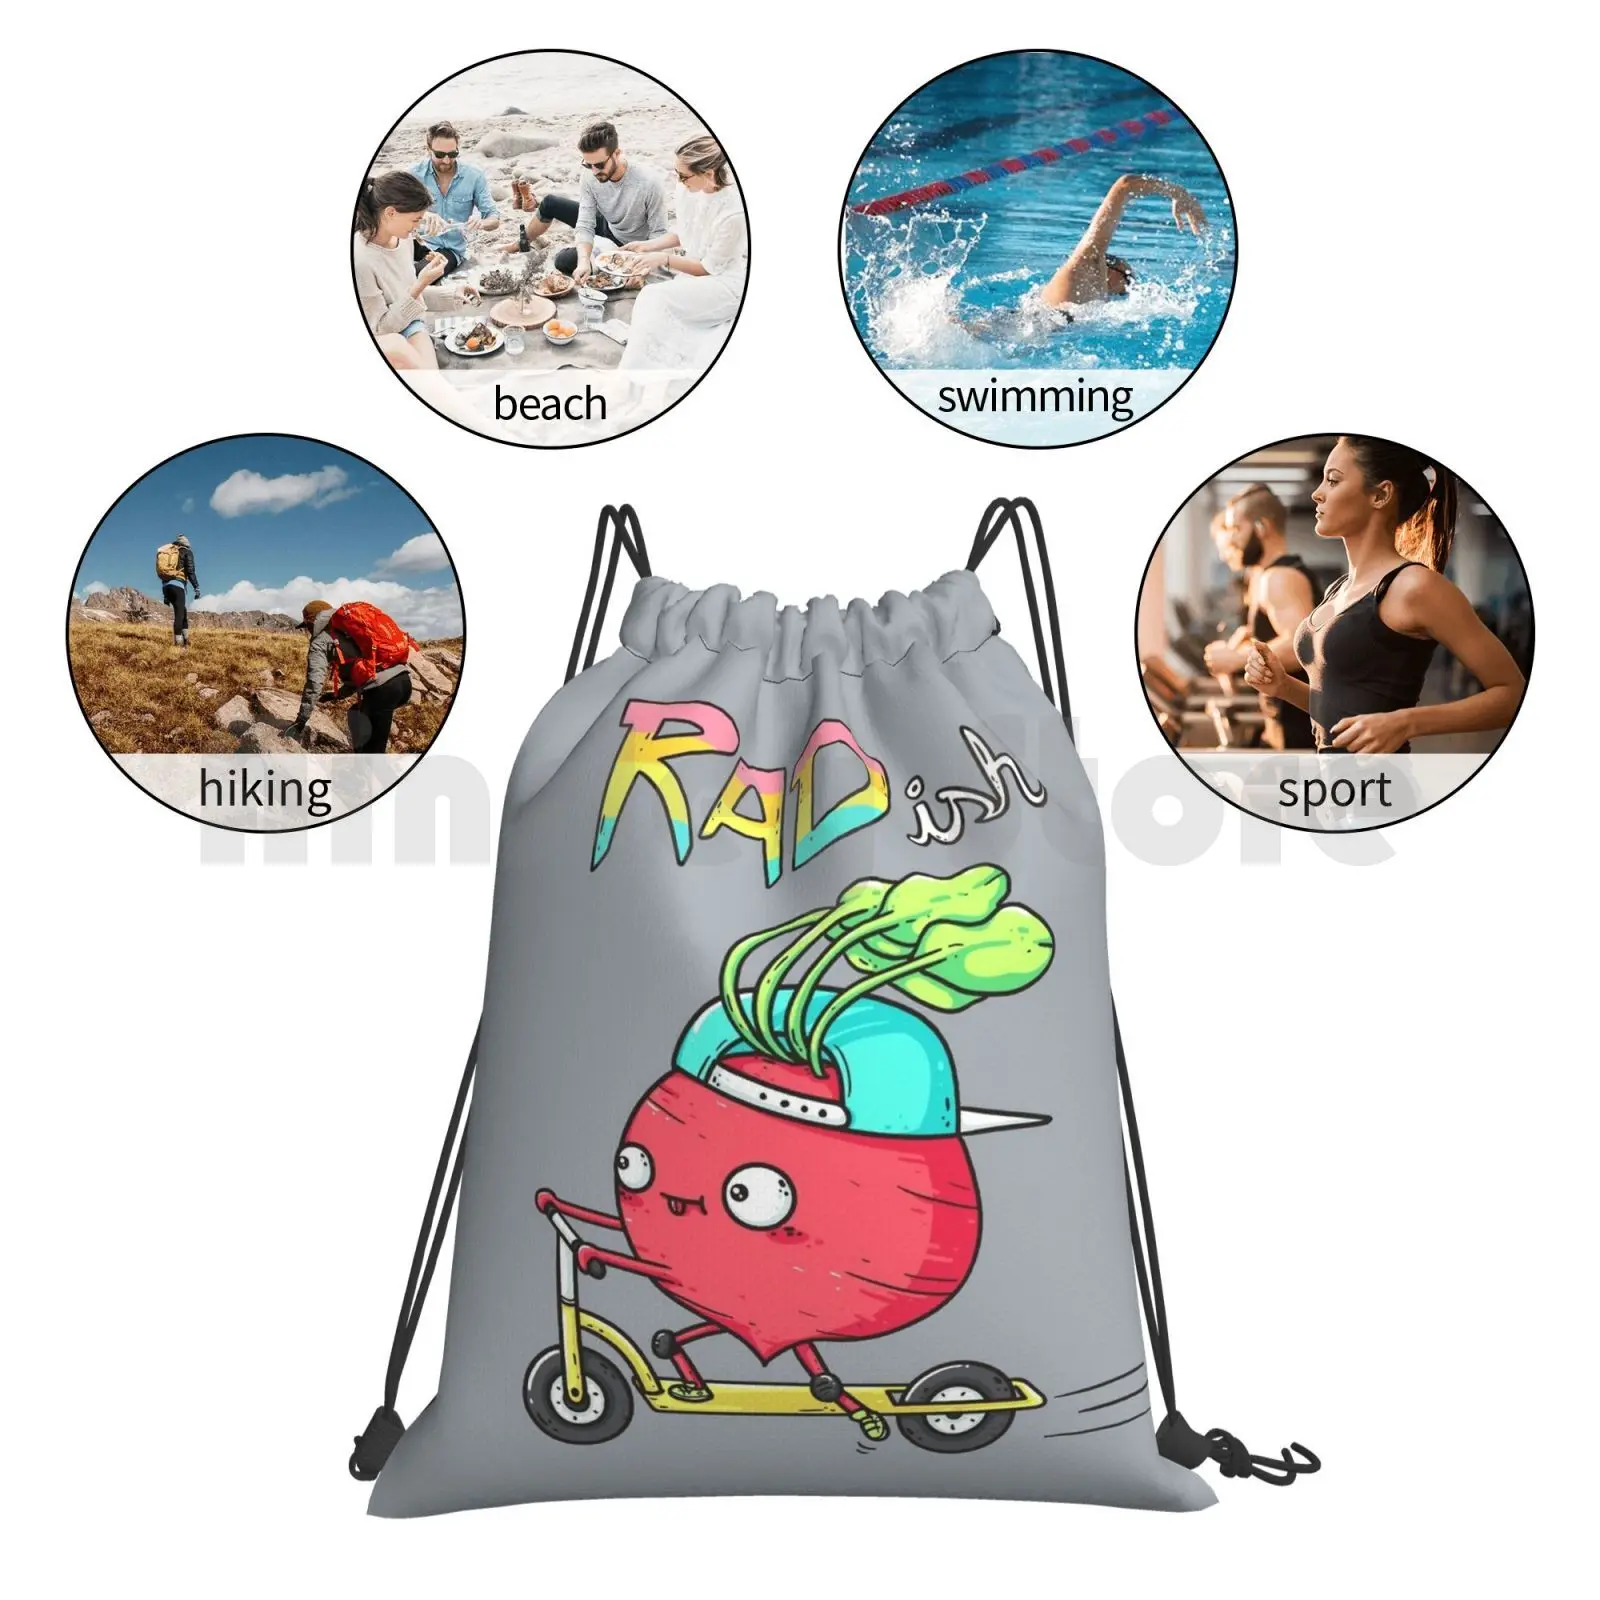 Ish Backpack Drawstring Bag Riding Climbing Gym Bag  Rad Radish Cute Cool Scooter Funny Humor images - 6